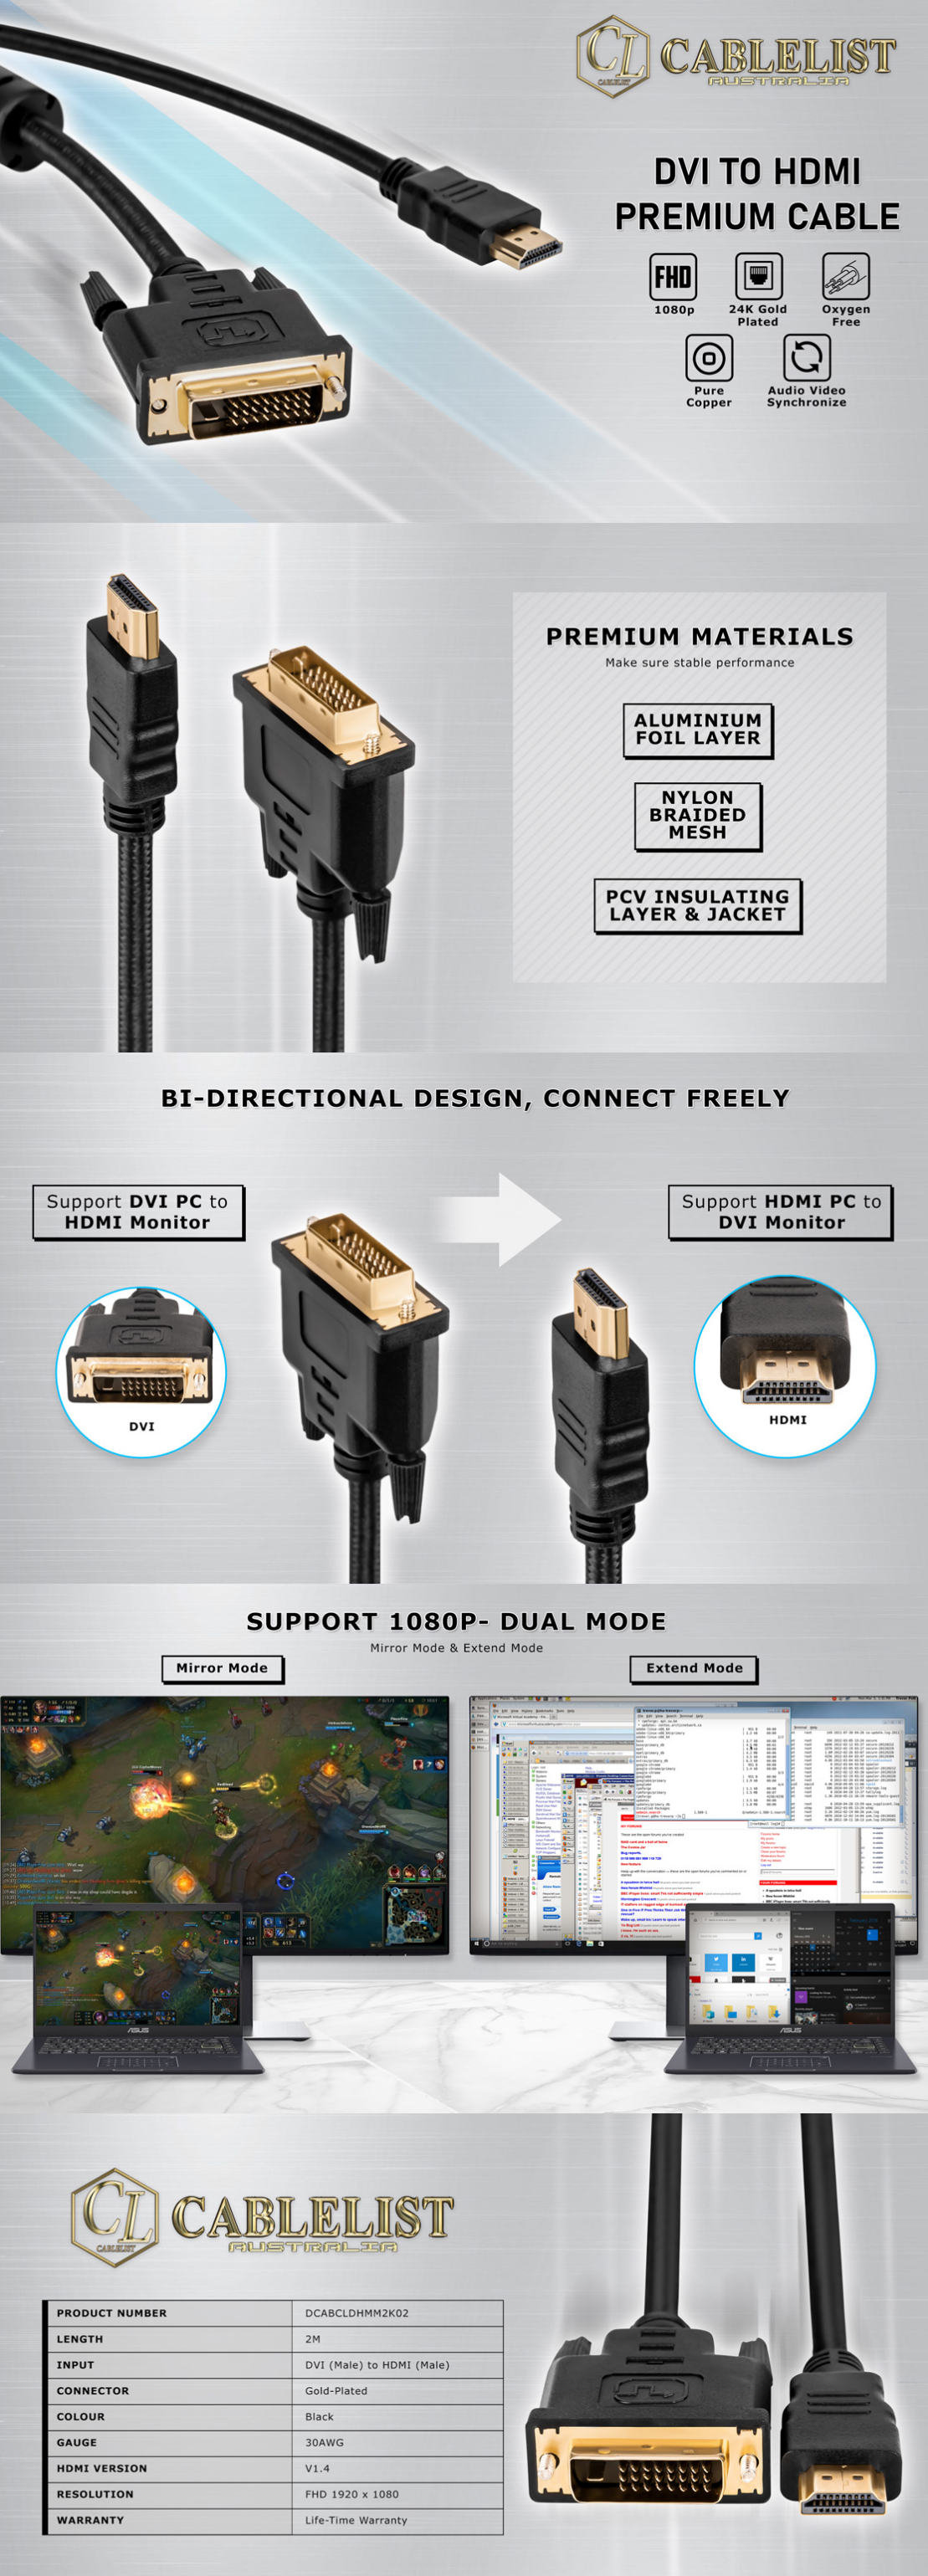 DVI-Cables-Cablelist-2K-DVI-Male-to-HDMI-Male-Cable-2m-3